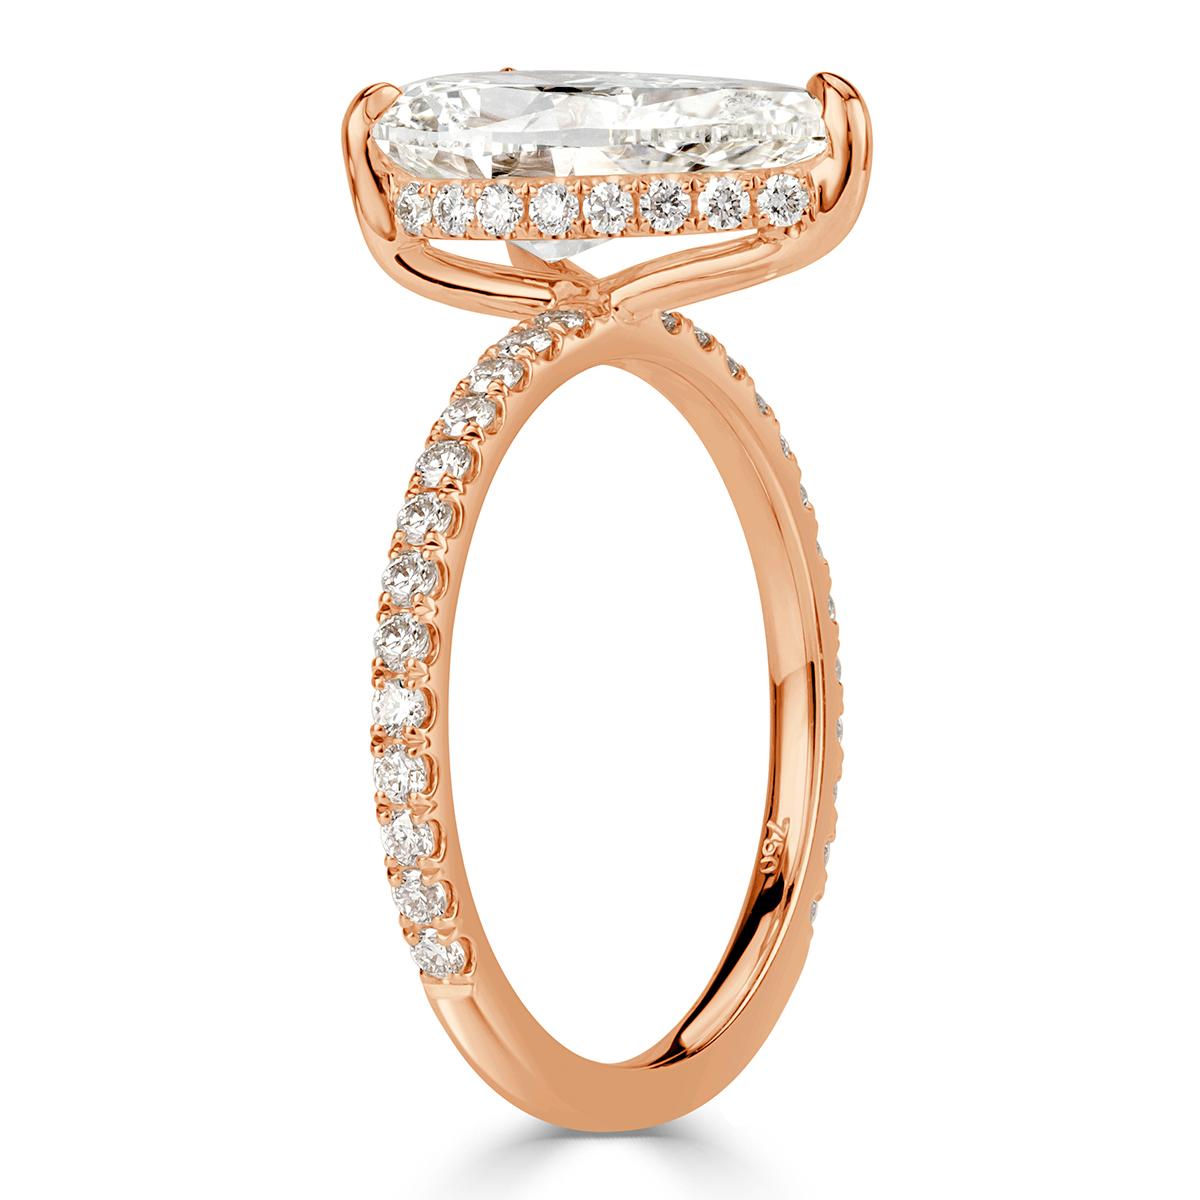 Women's or Men's Mark Broumand 3.49 Carat Pear Shaped Diamond Engagement Ring